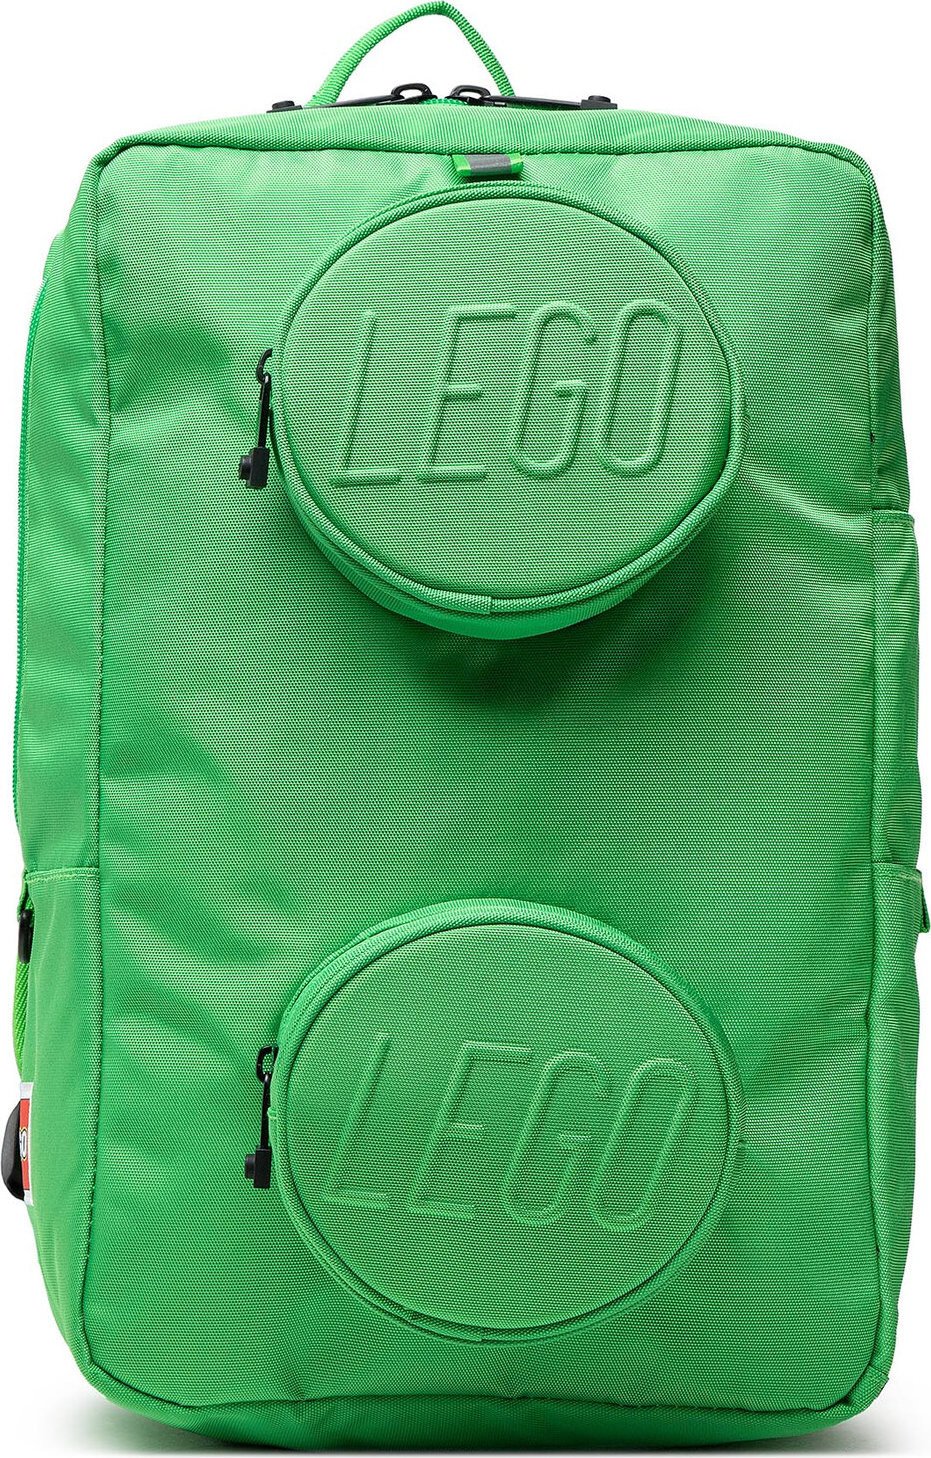 Batoh LEGO Brick 1x2 Backpack 20204-0037 Bright Green